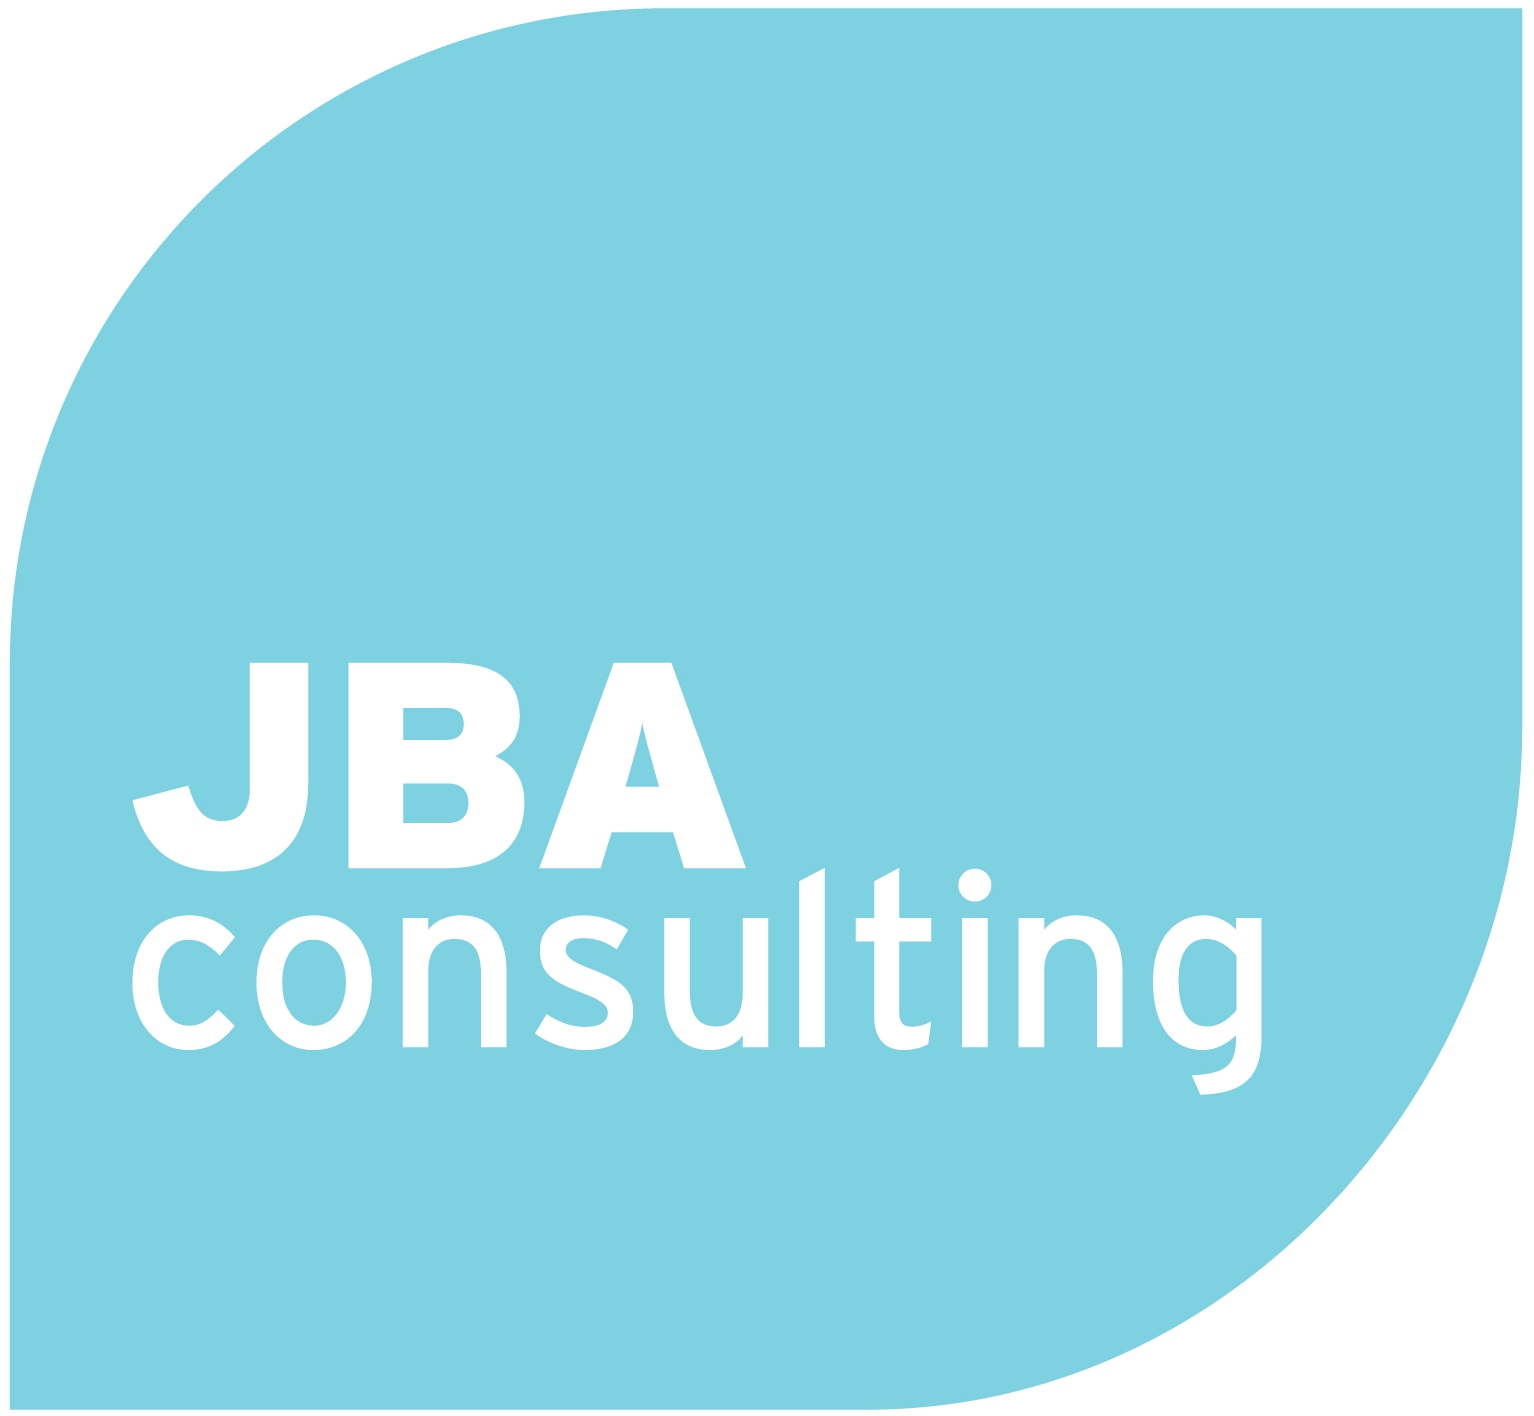 JBA Consulting logo